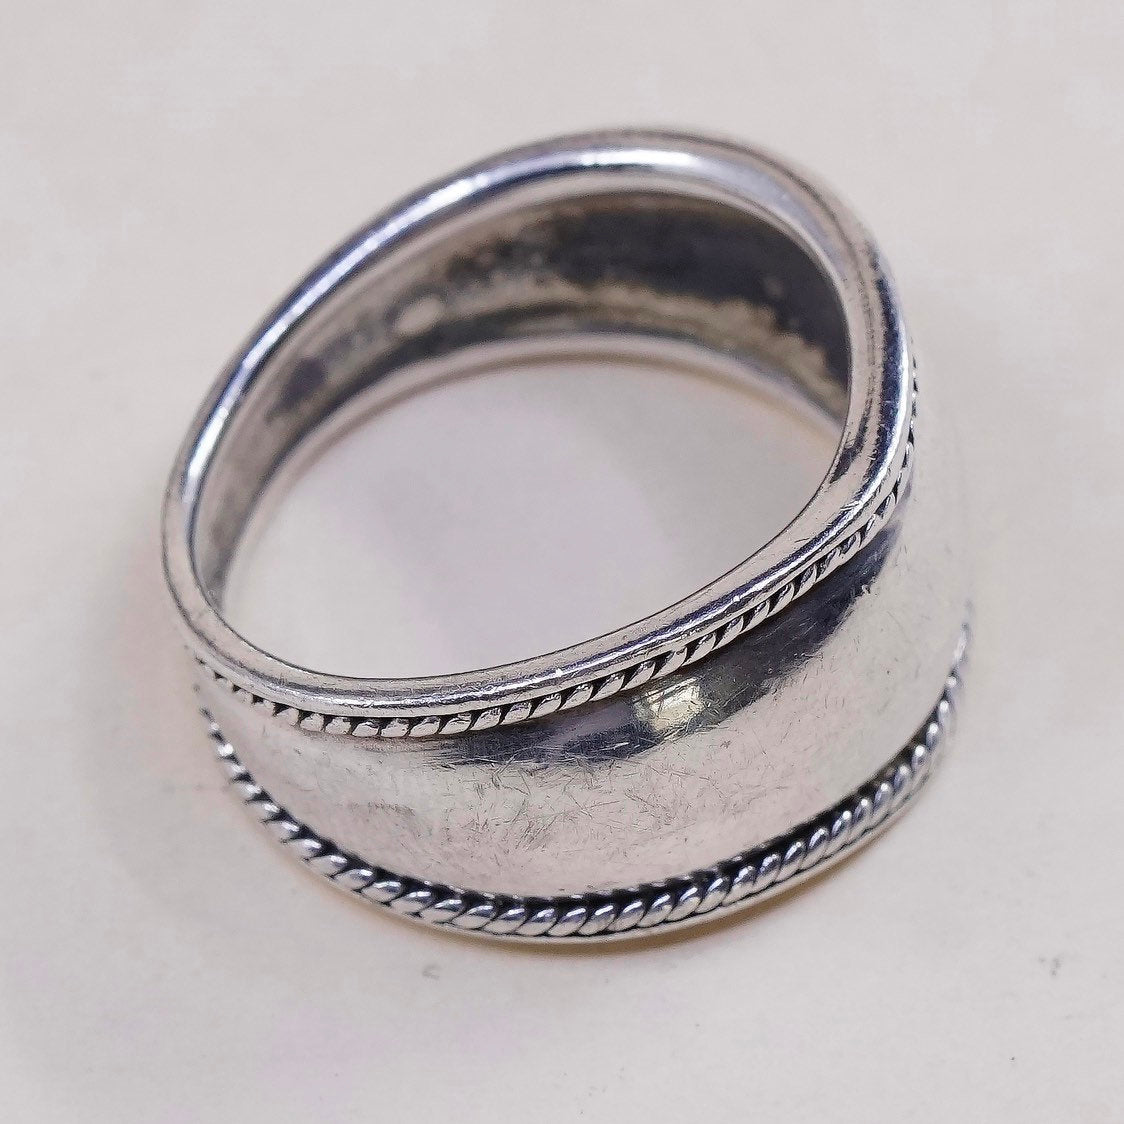 sz 10, vtg sterling silver handmade ring, 925 band w/ rope details,